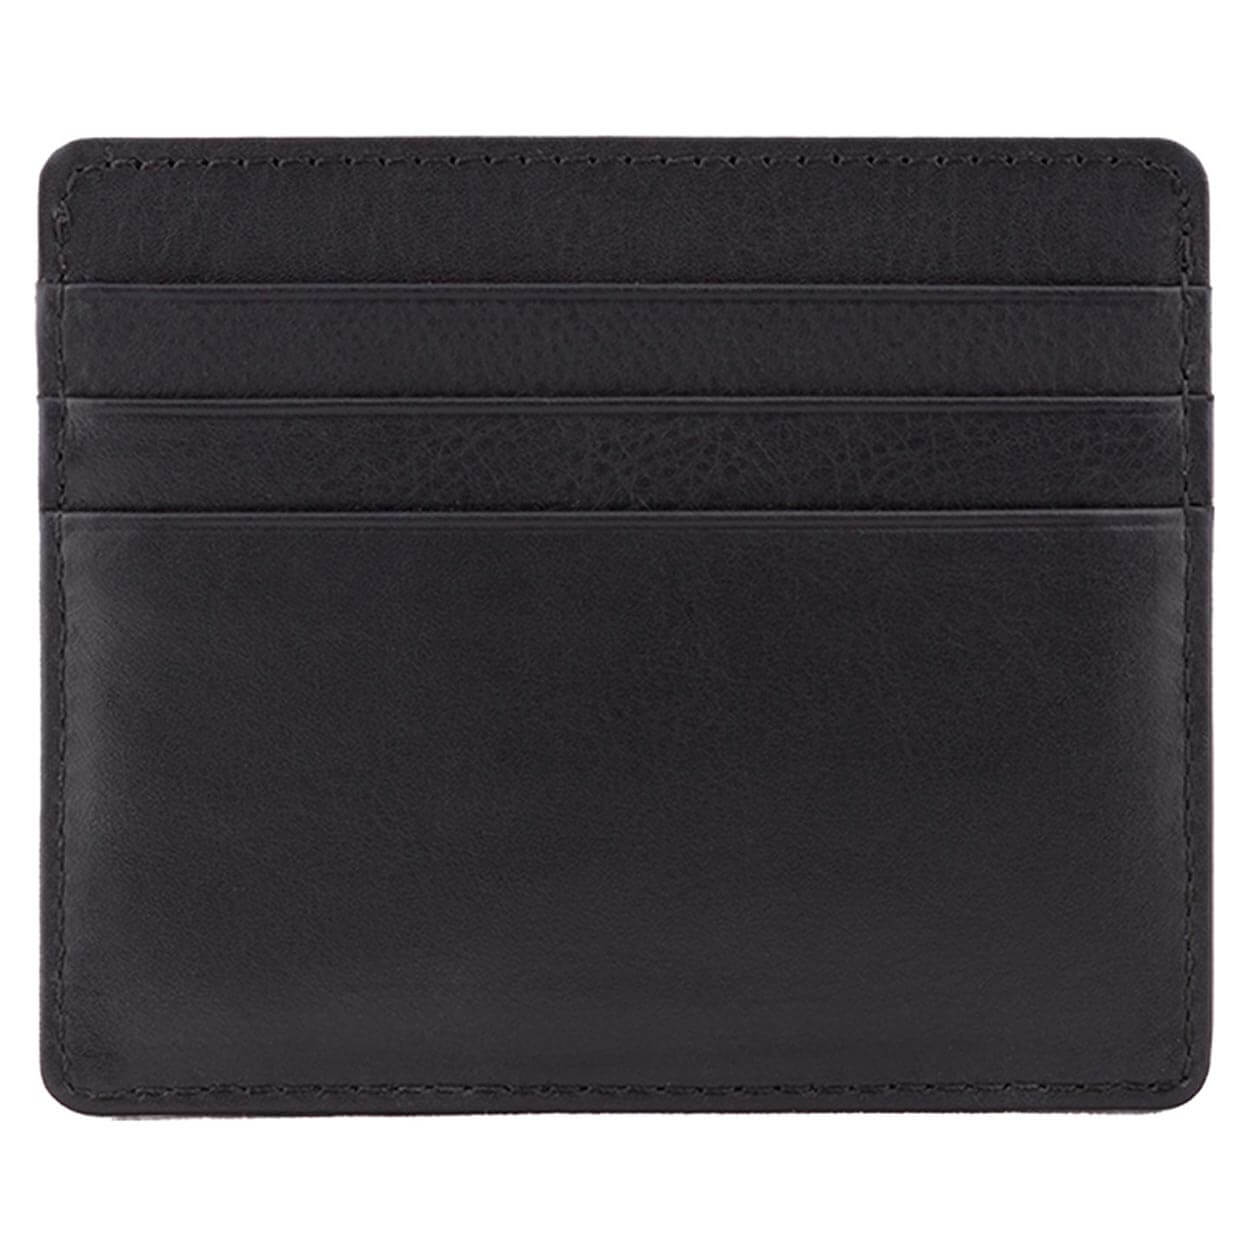 Card Wallet - Black